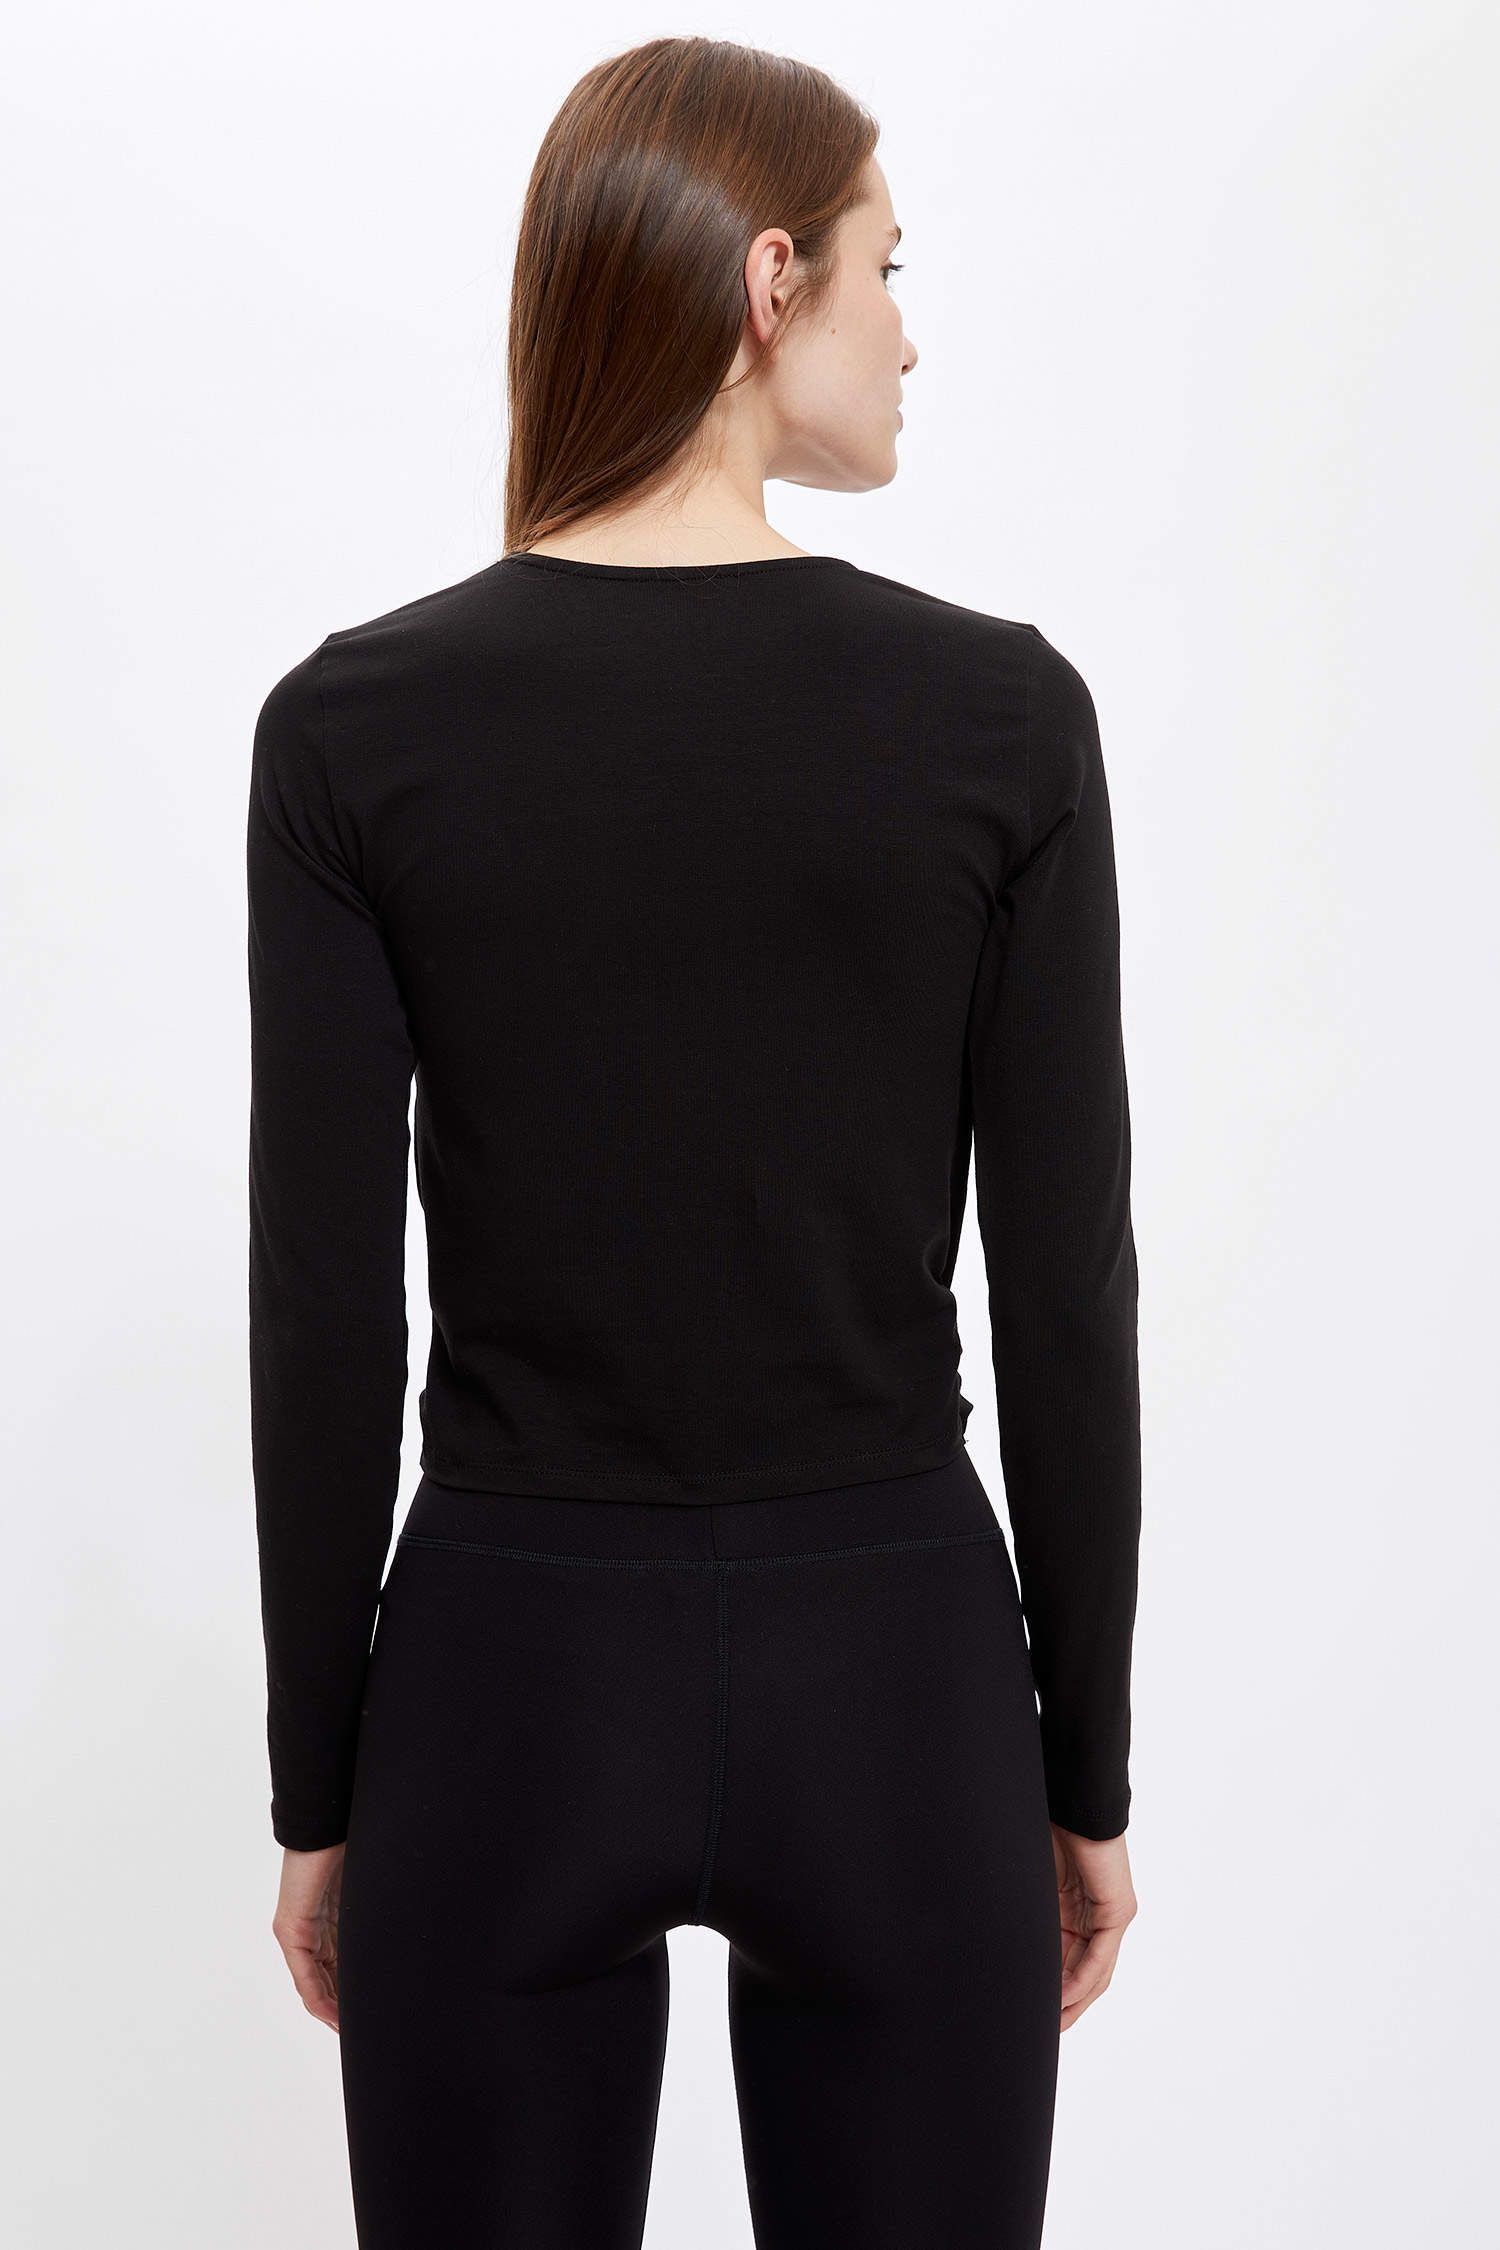 Black WOMAN Long Sleeve Knitted Crop Top 1520572 | DeFacto